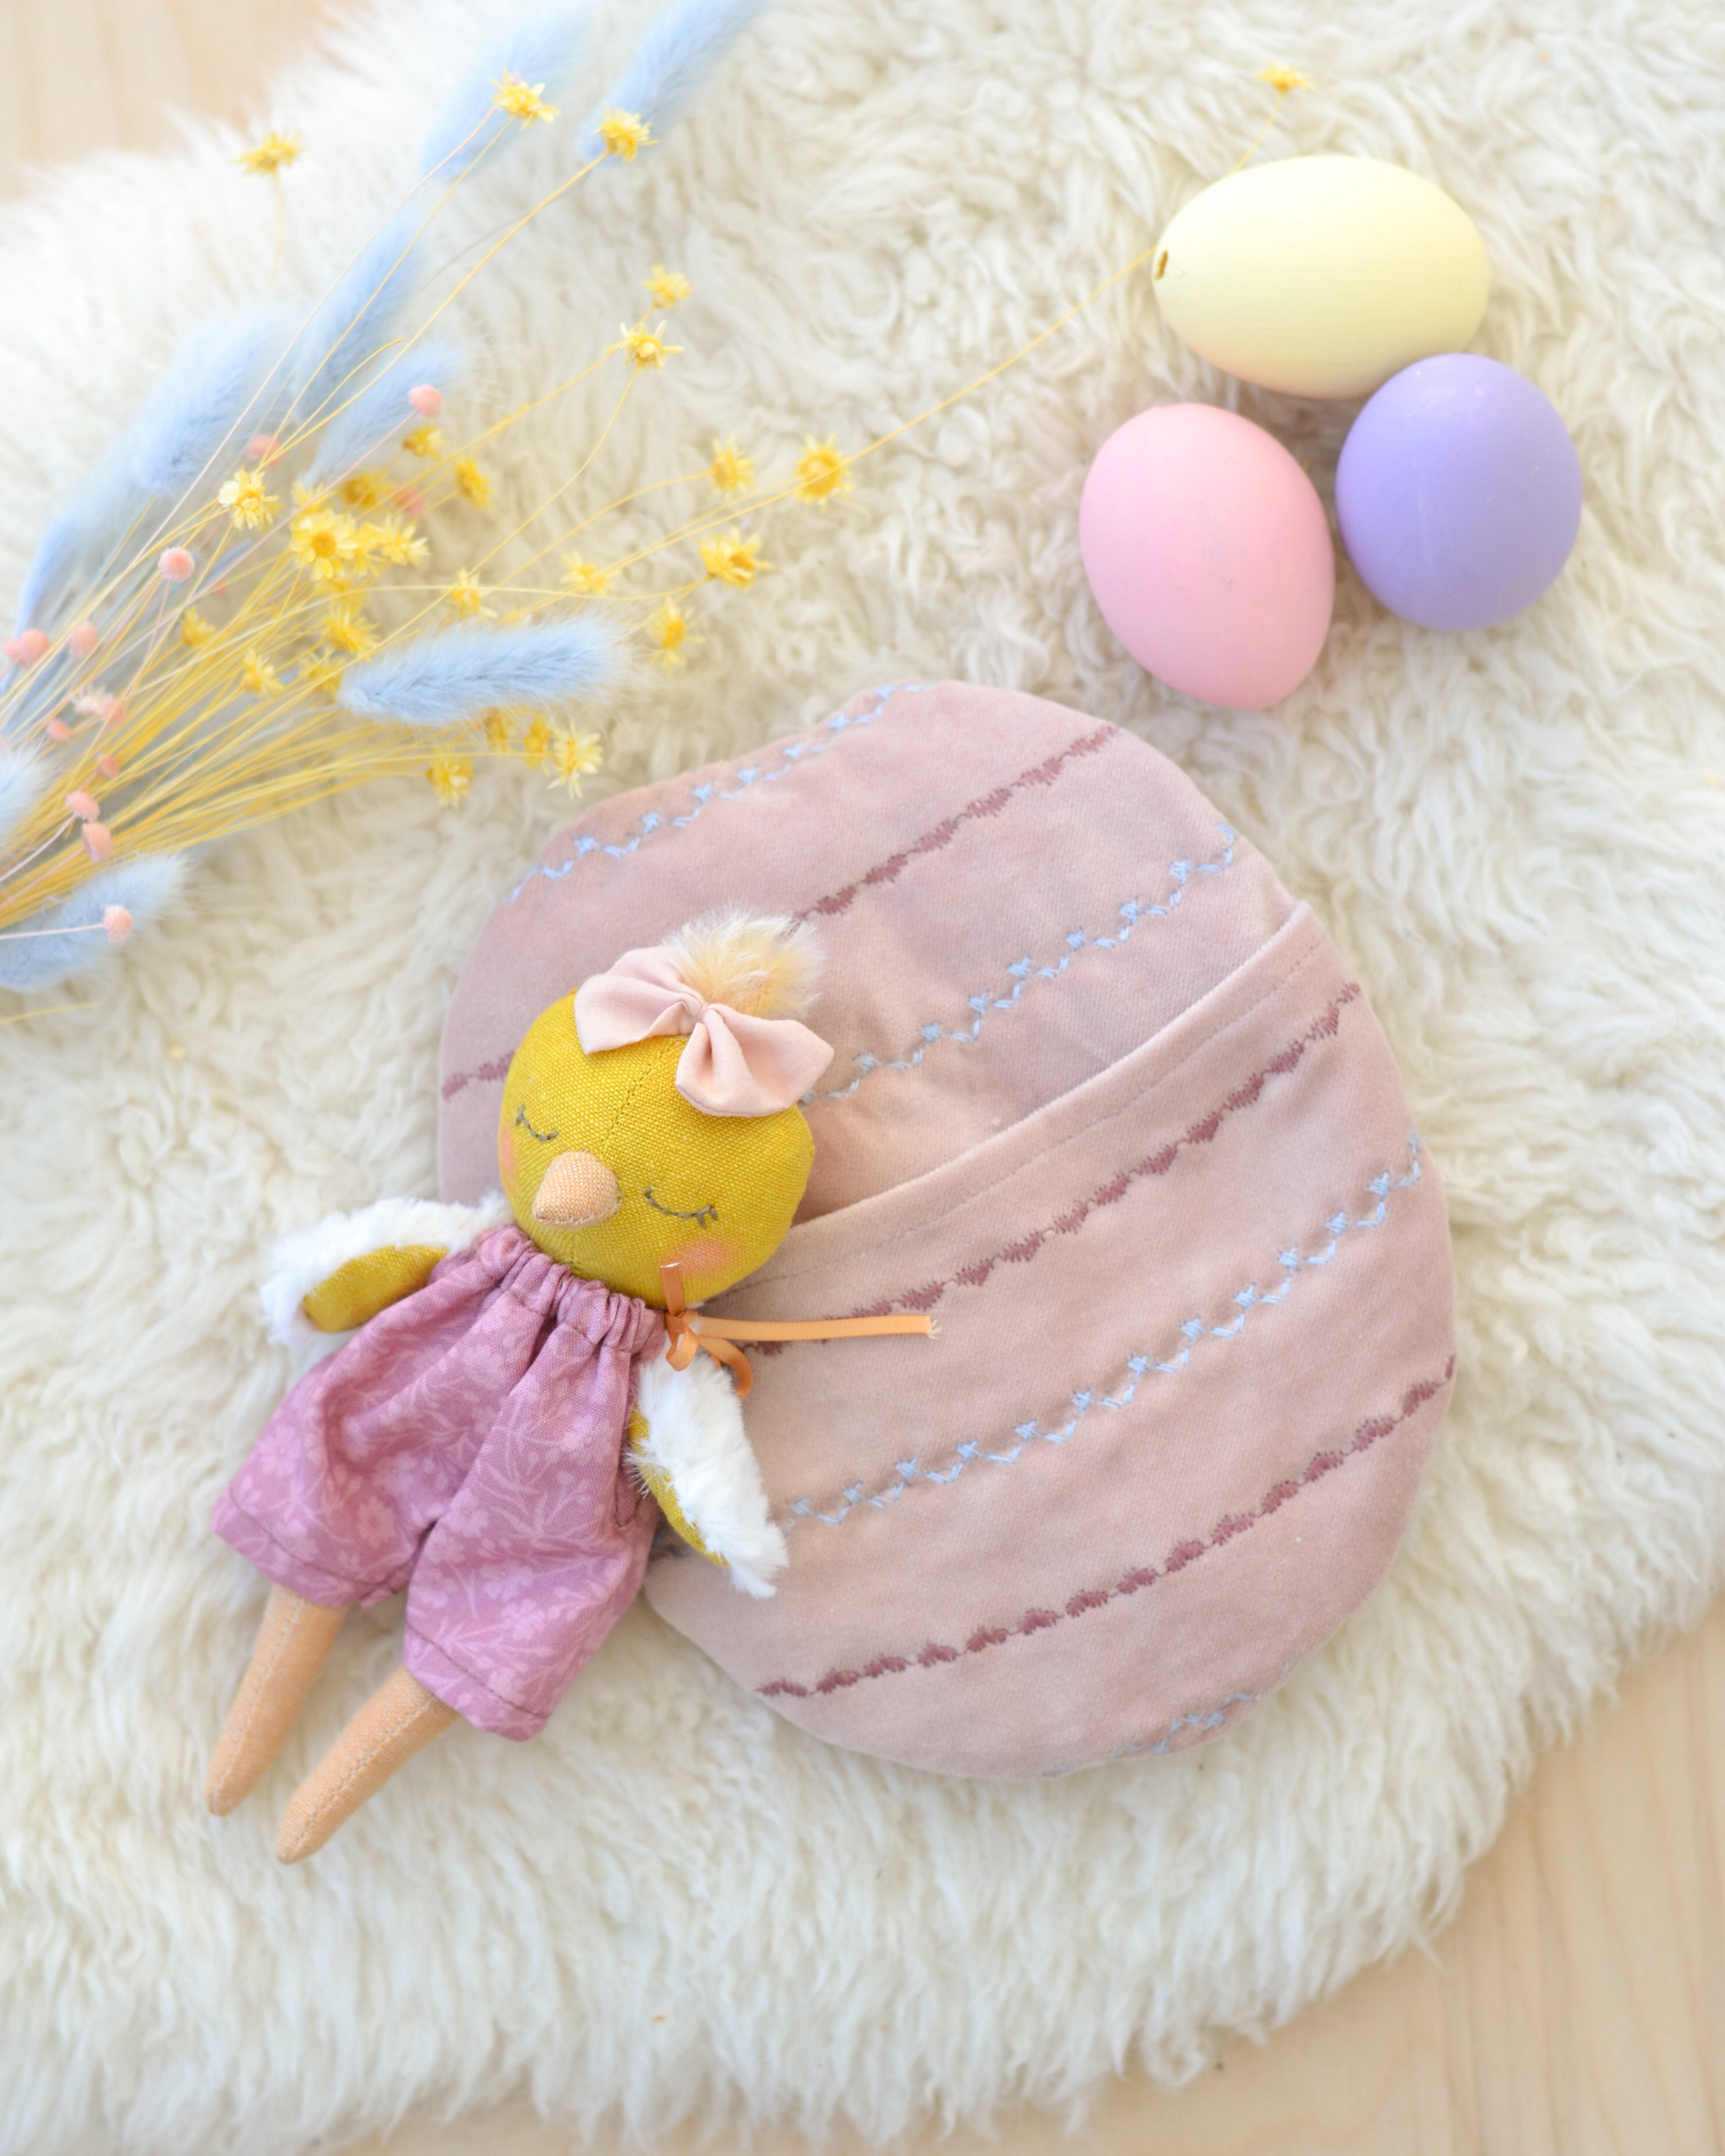 Mini Chick and Easter Egg-shaped Bed cotton velvet